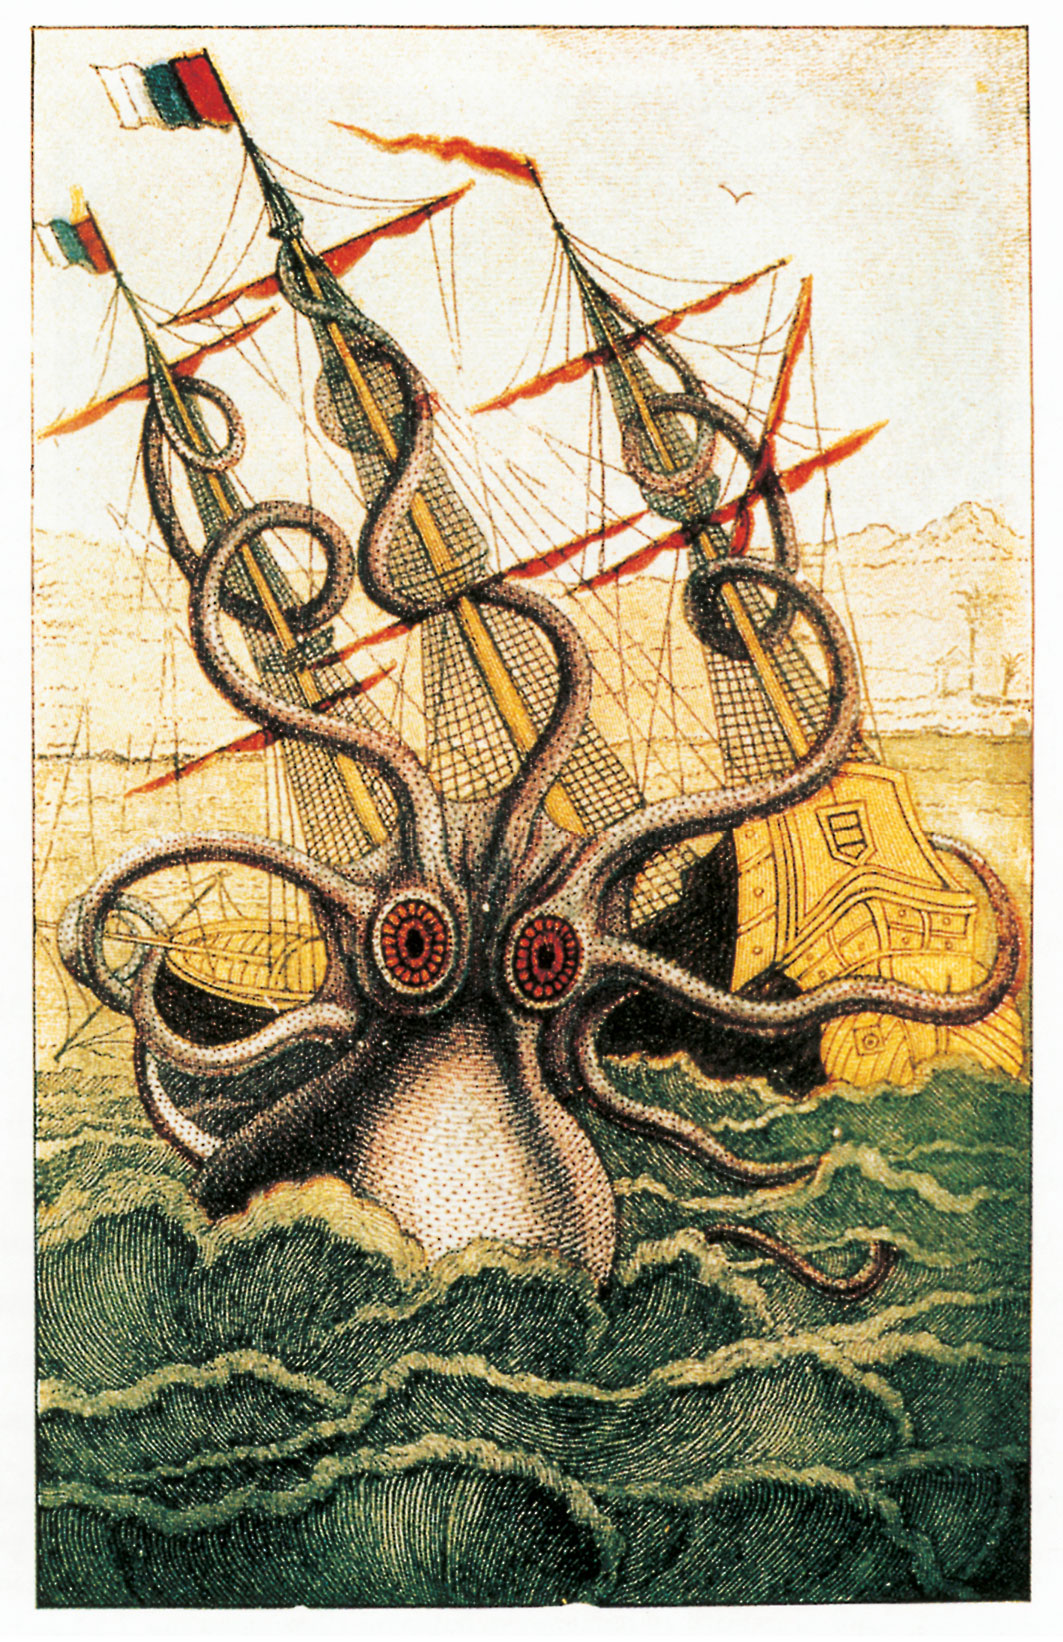 A postcard of Denys de Montfort's 1805 